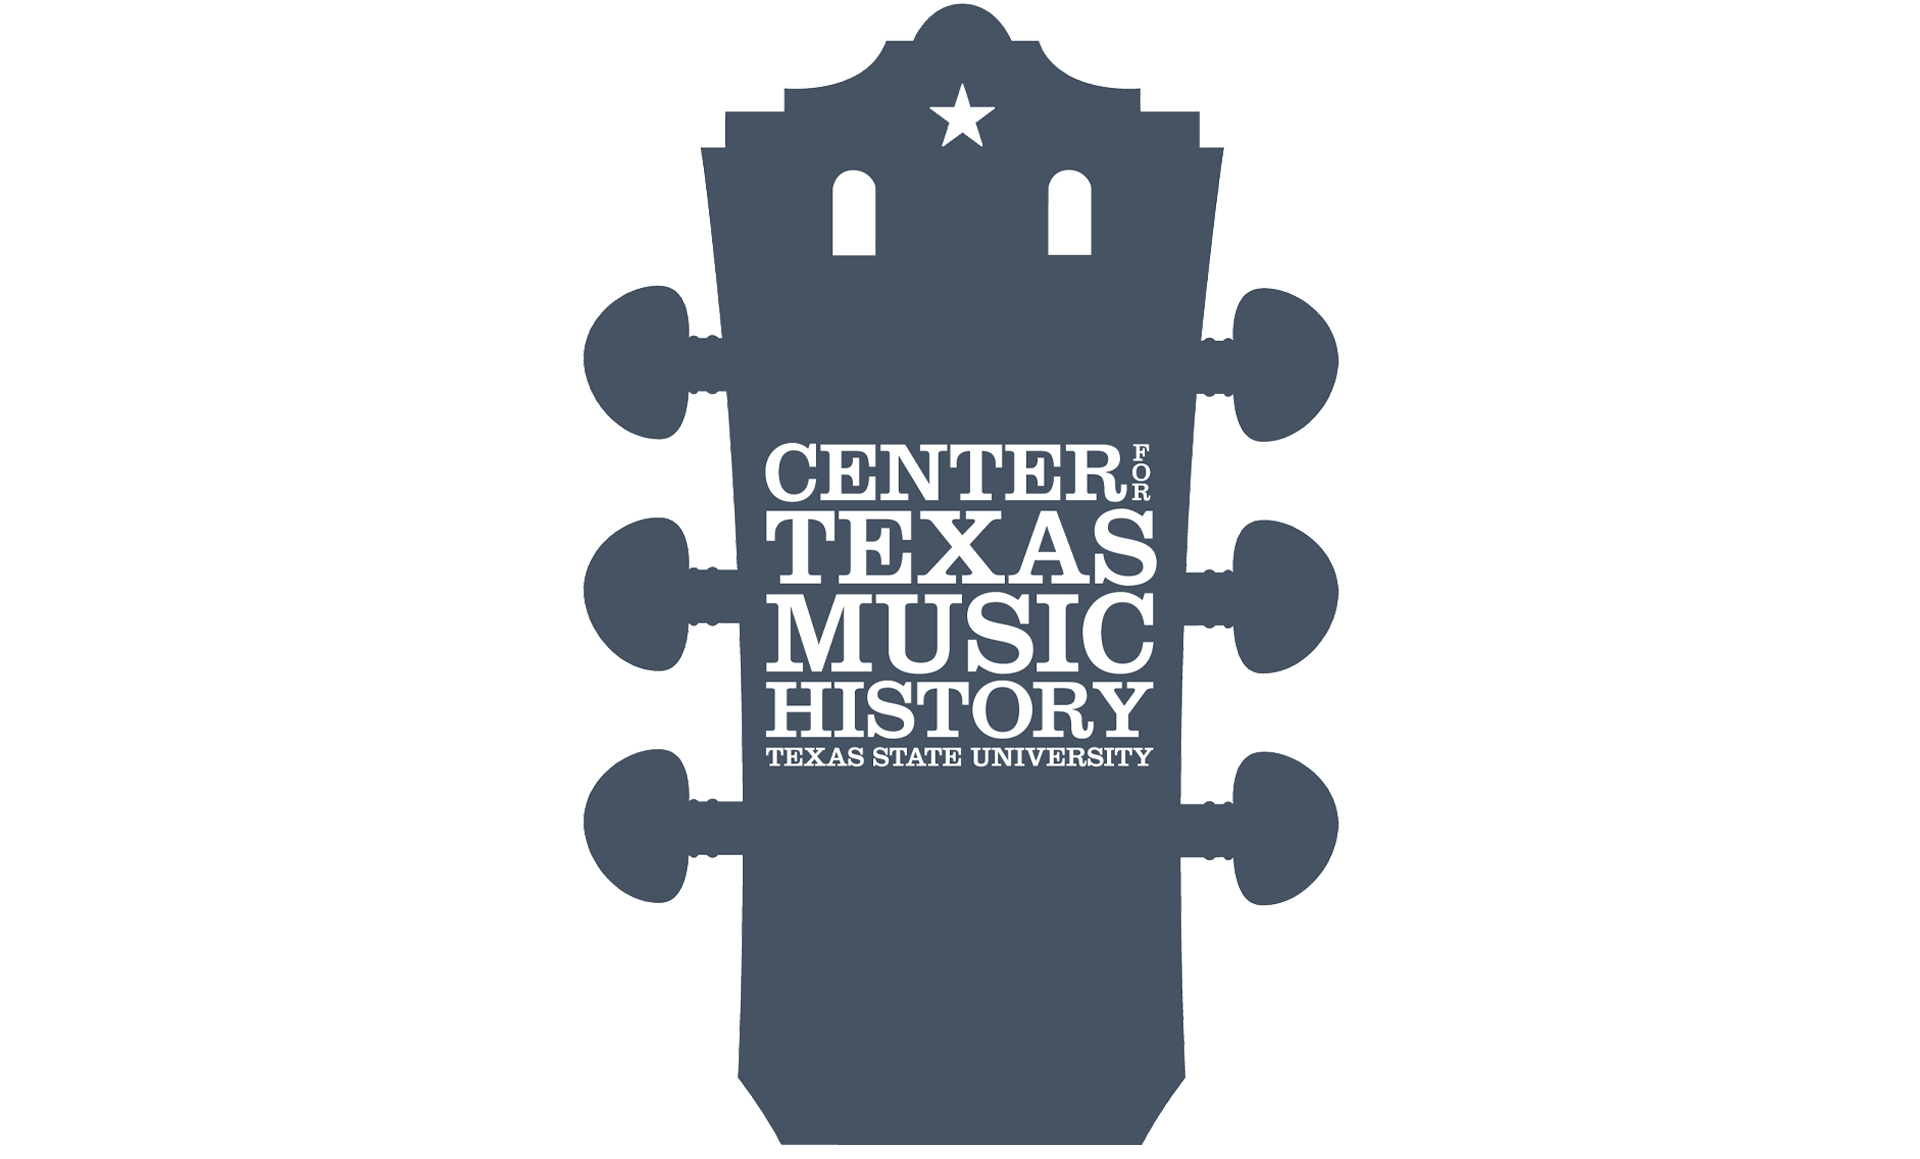 Center for Texas Music History